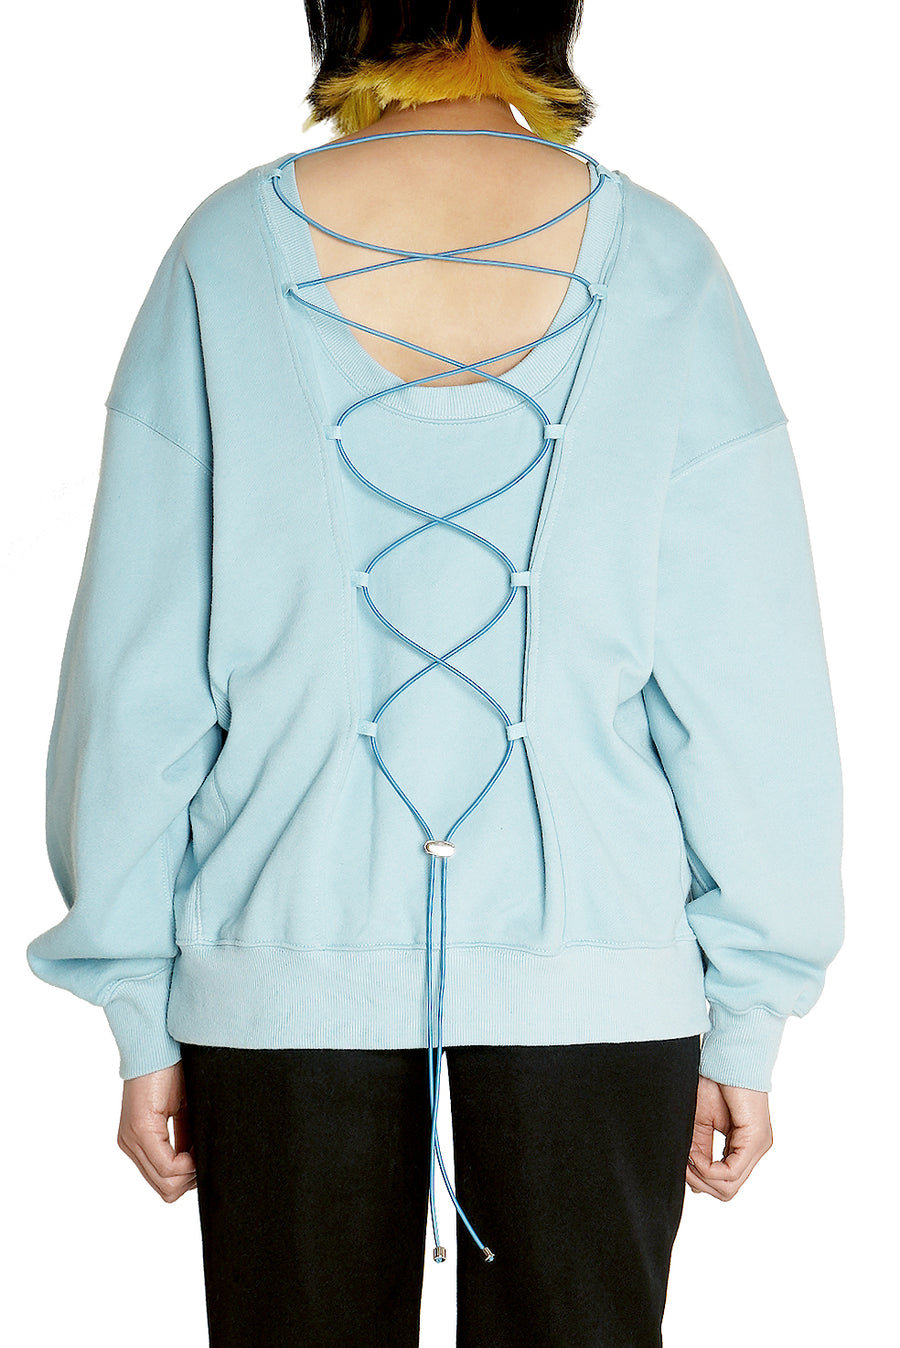 Ash Blue Back Lace – Up Sweatshirt CHANCE